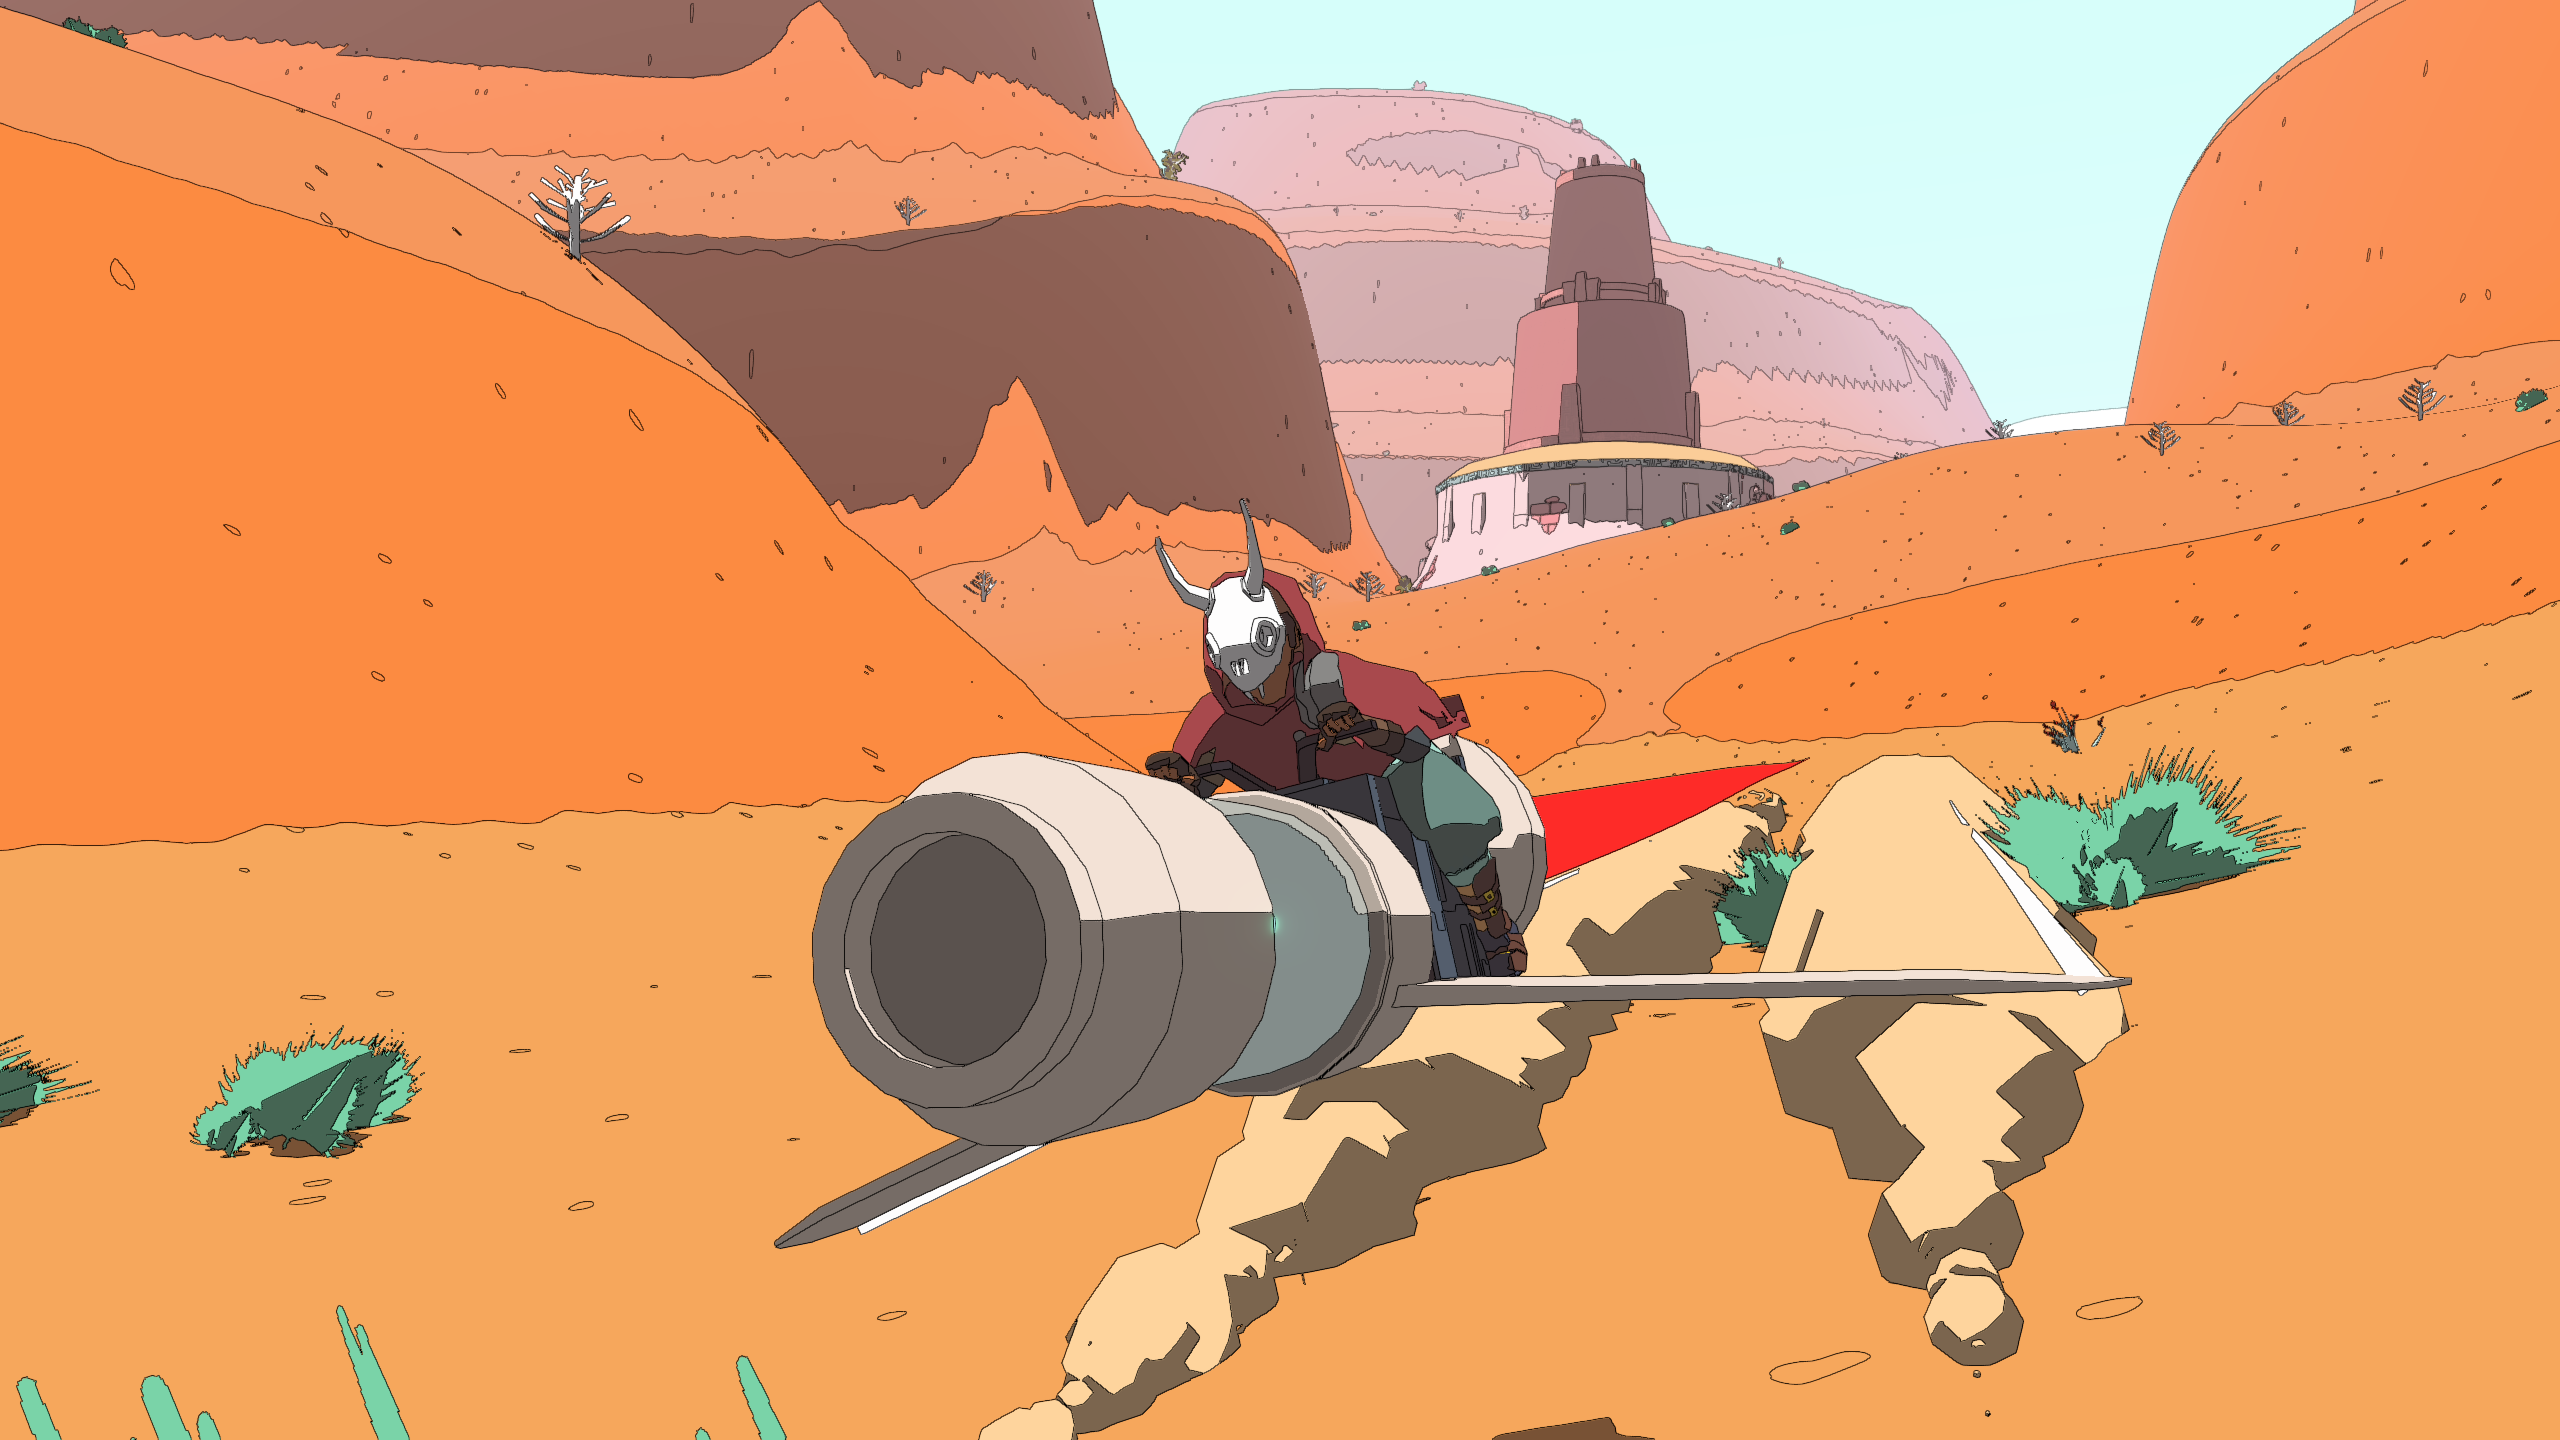 Hoverbiking through the desert in a Sable screenshot.